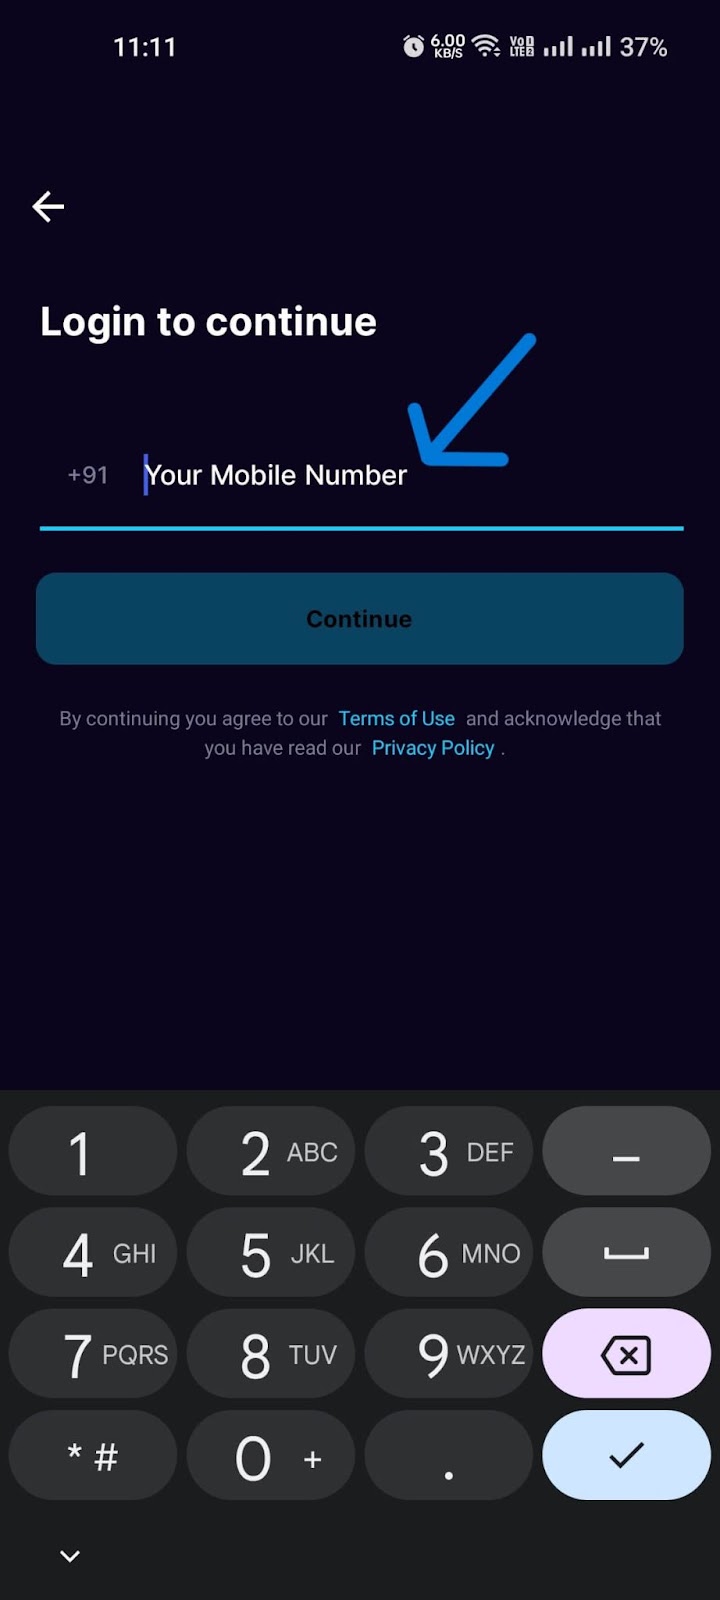 enter-mobile-number-and-login